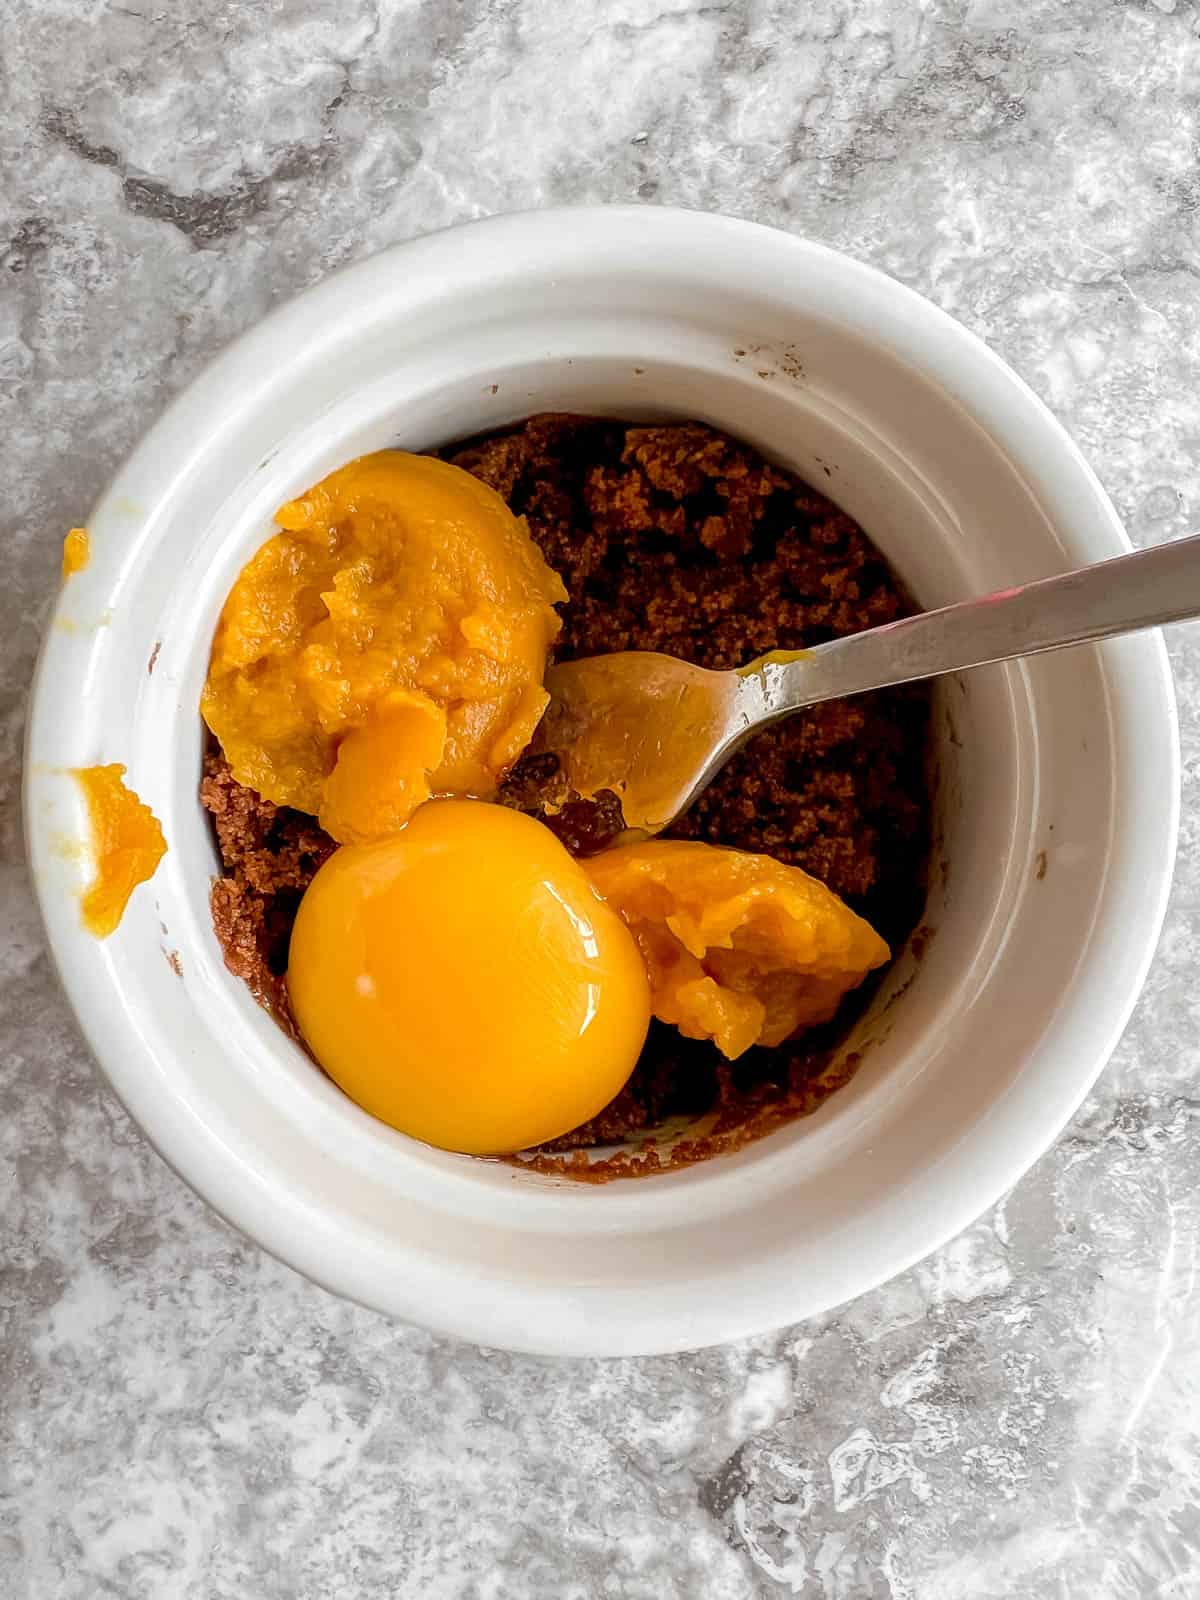 Pumpkin puree and egg yolk added to ramekin.